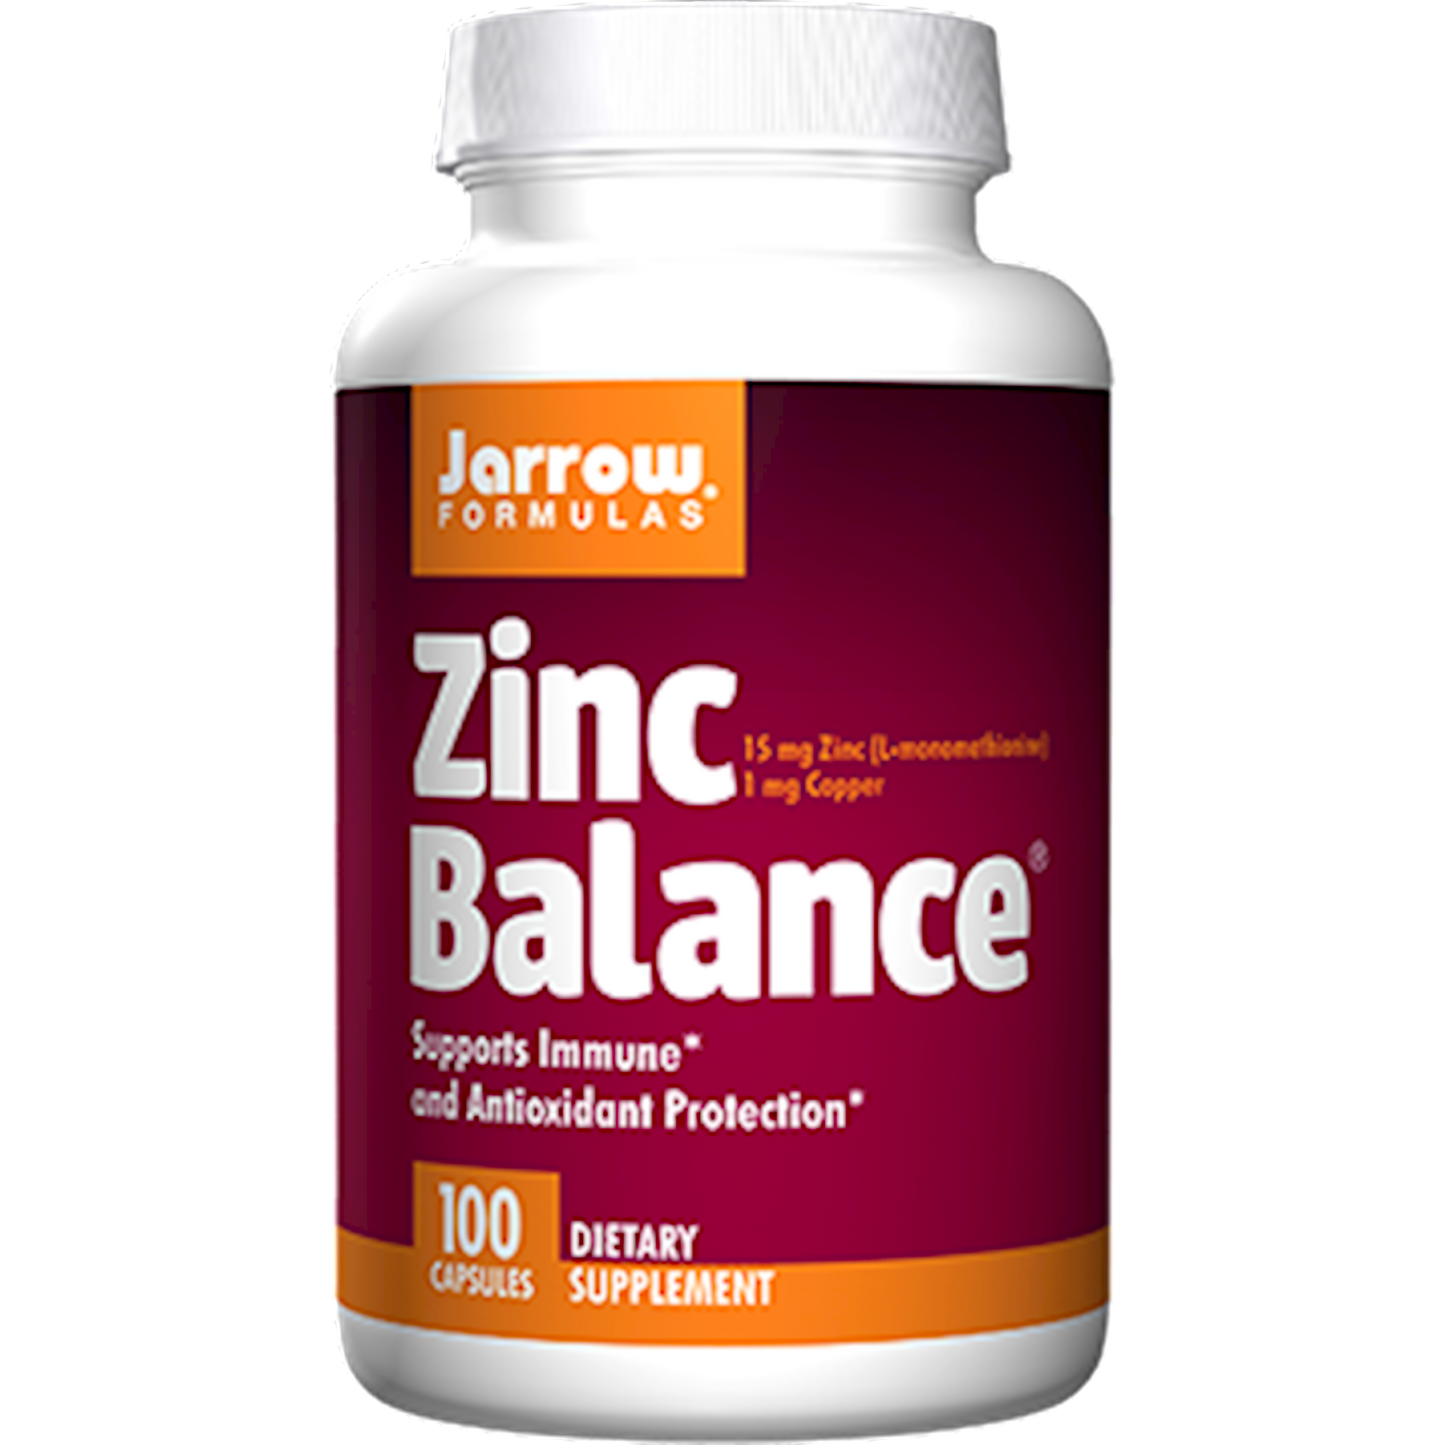 Zinc Balance